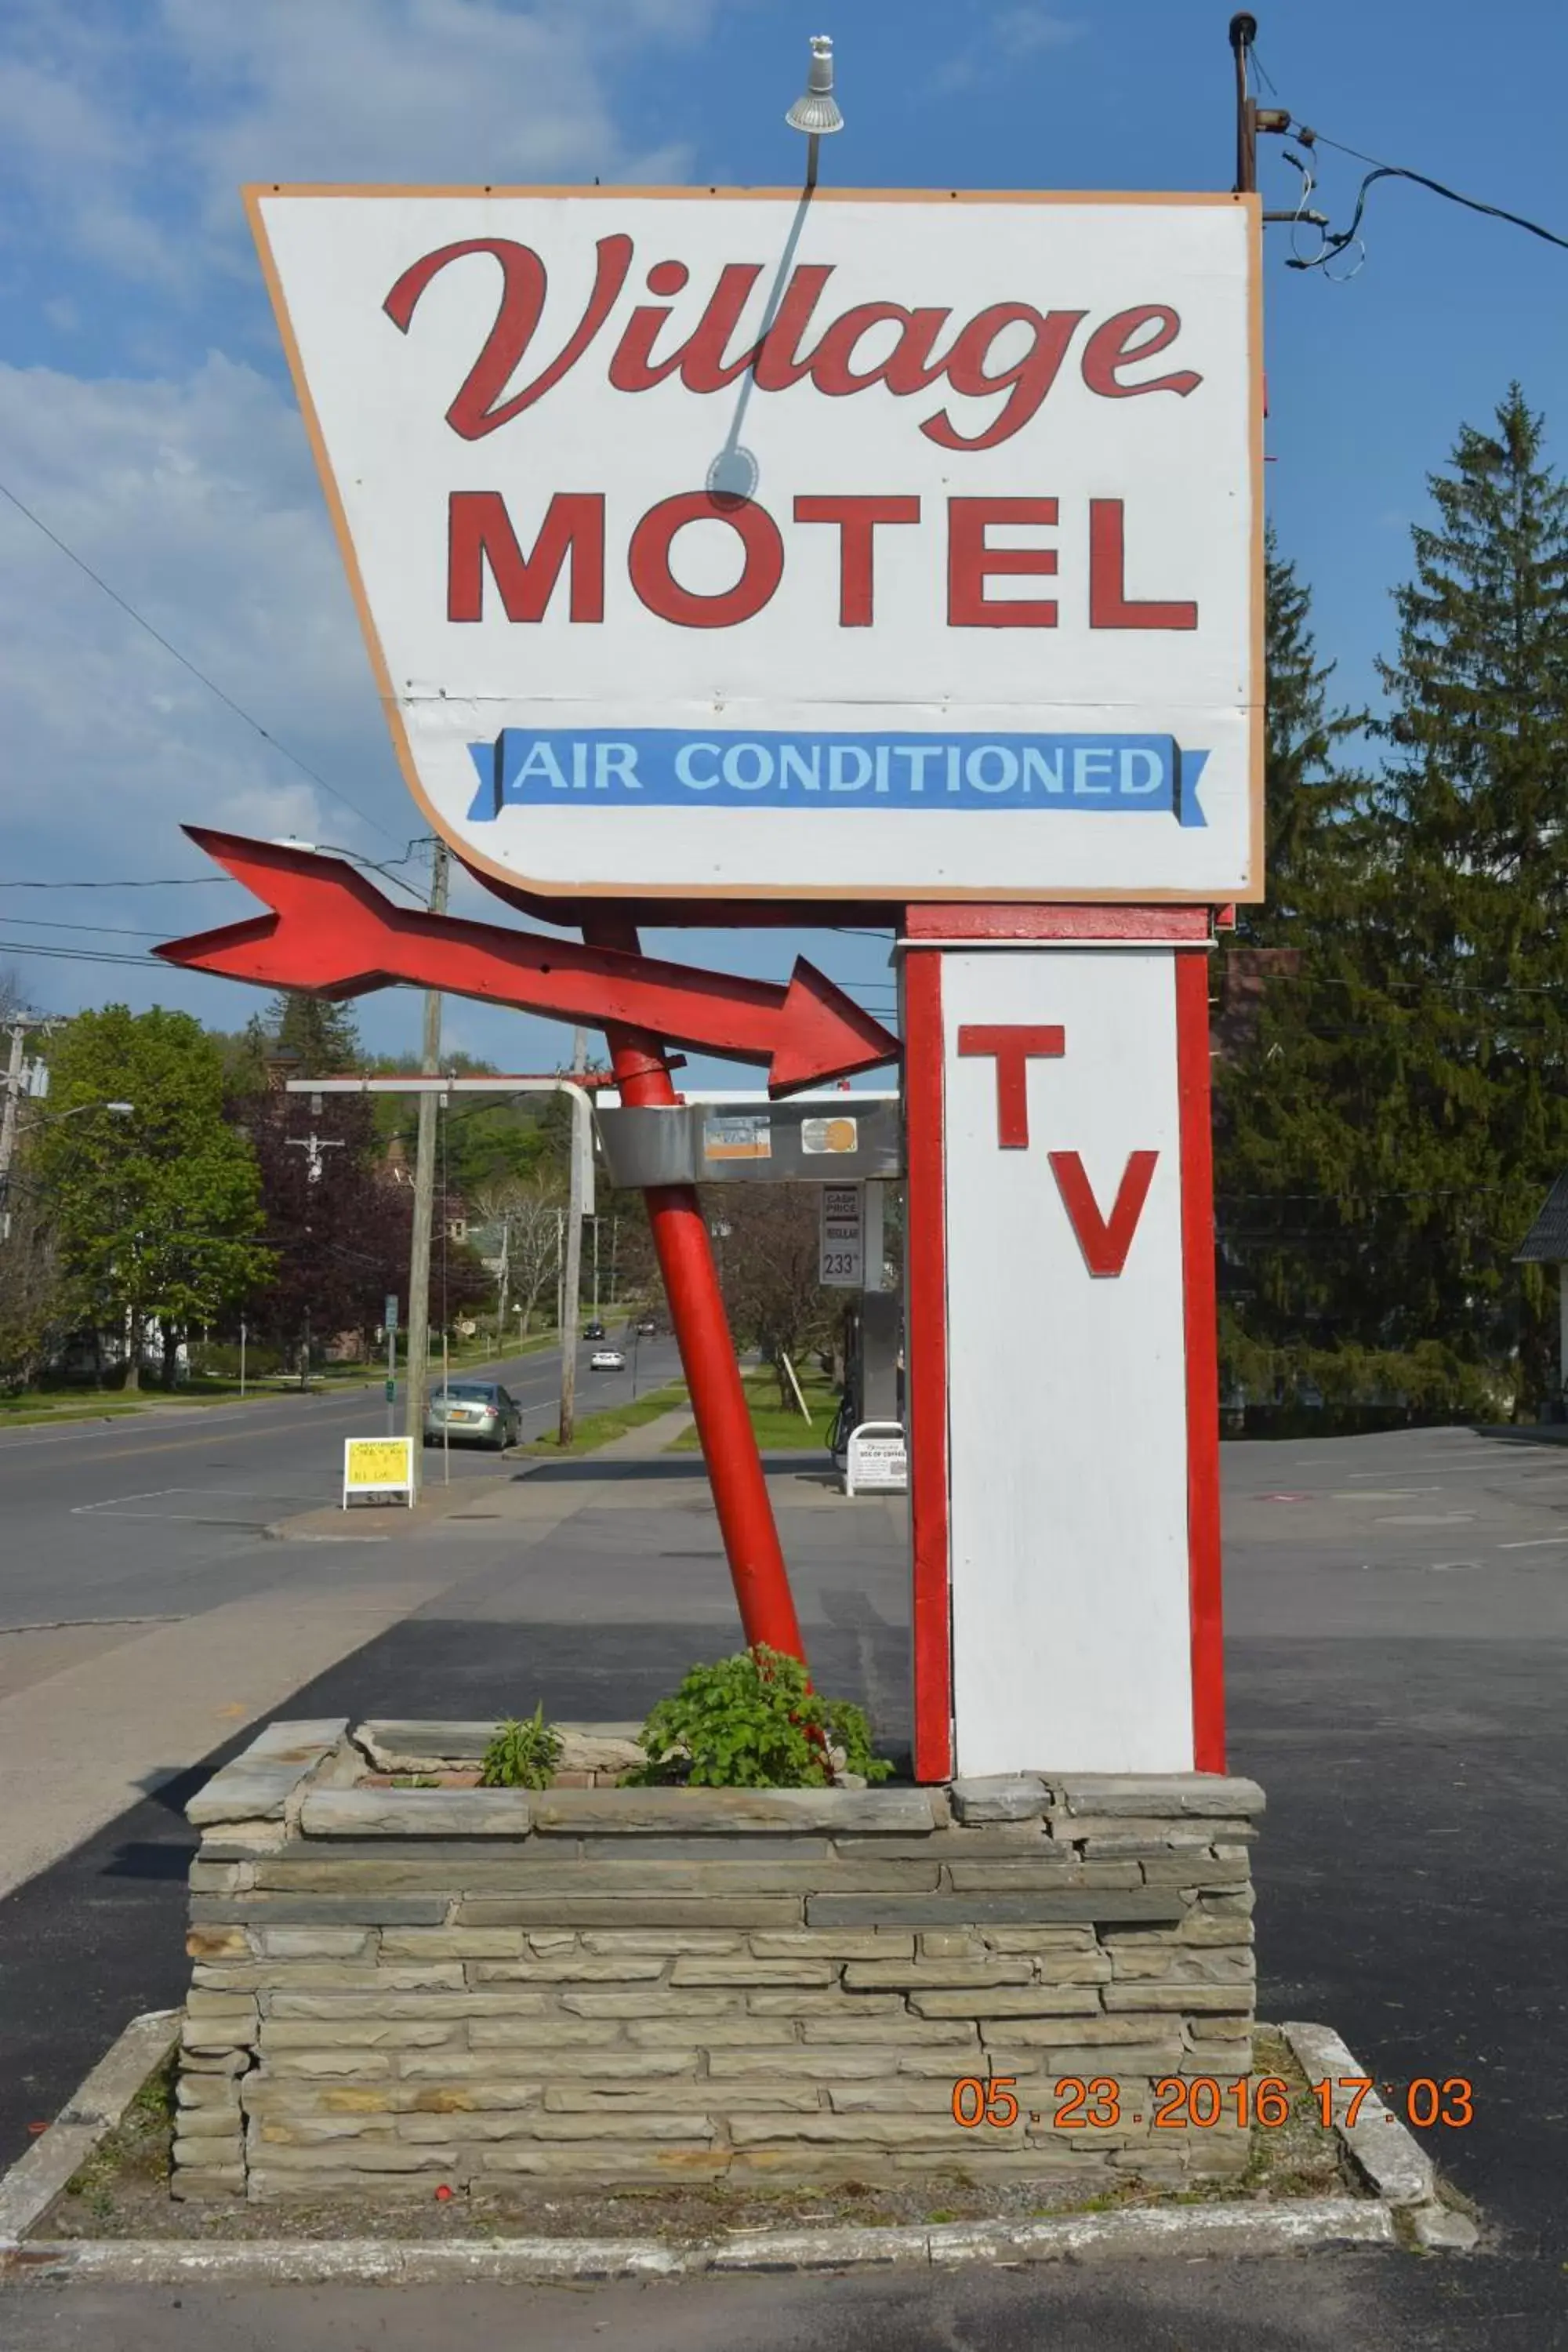 Property logo or sign, Facade/Entrance in The Village Motel